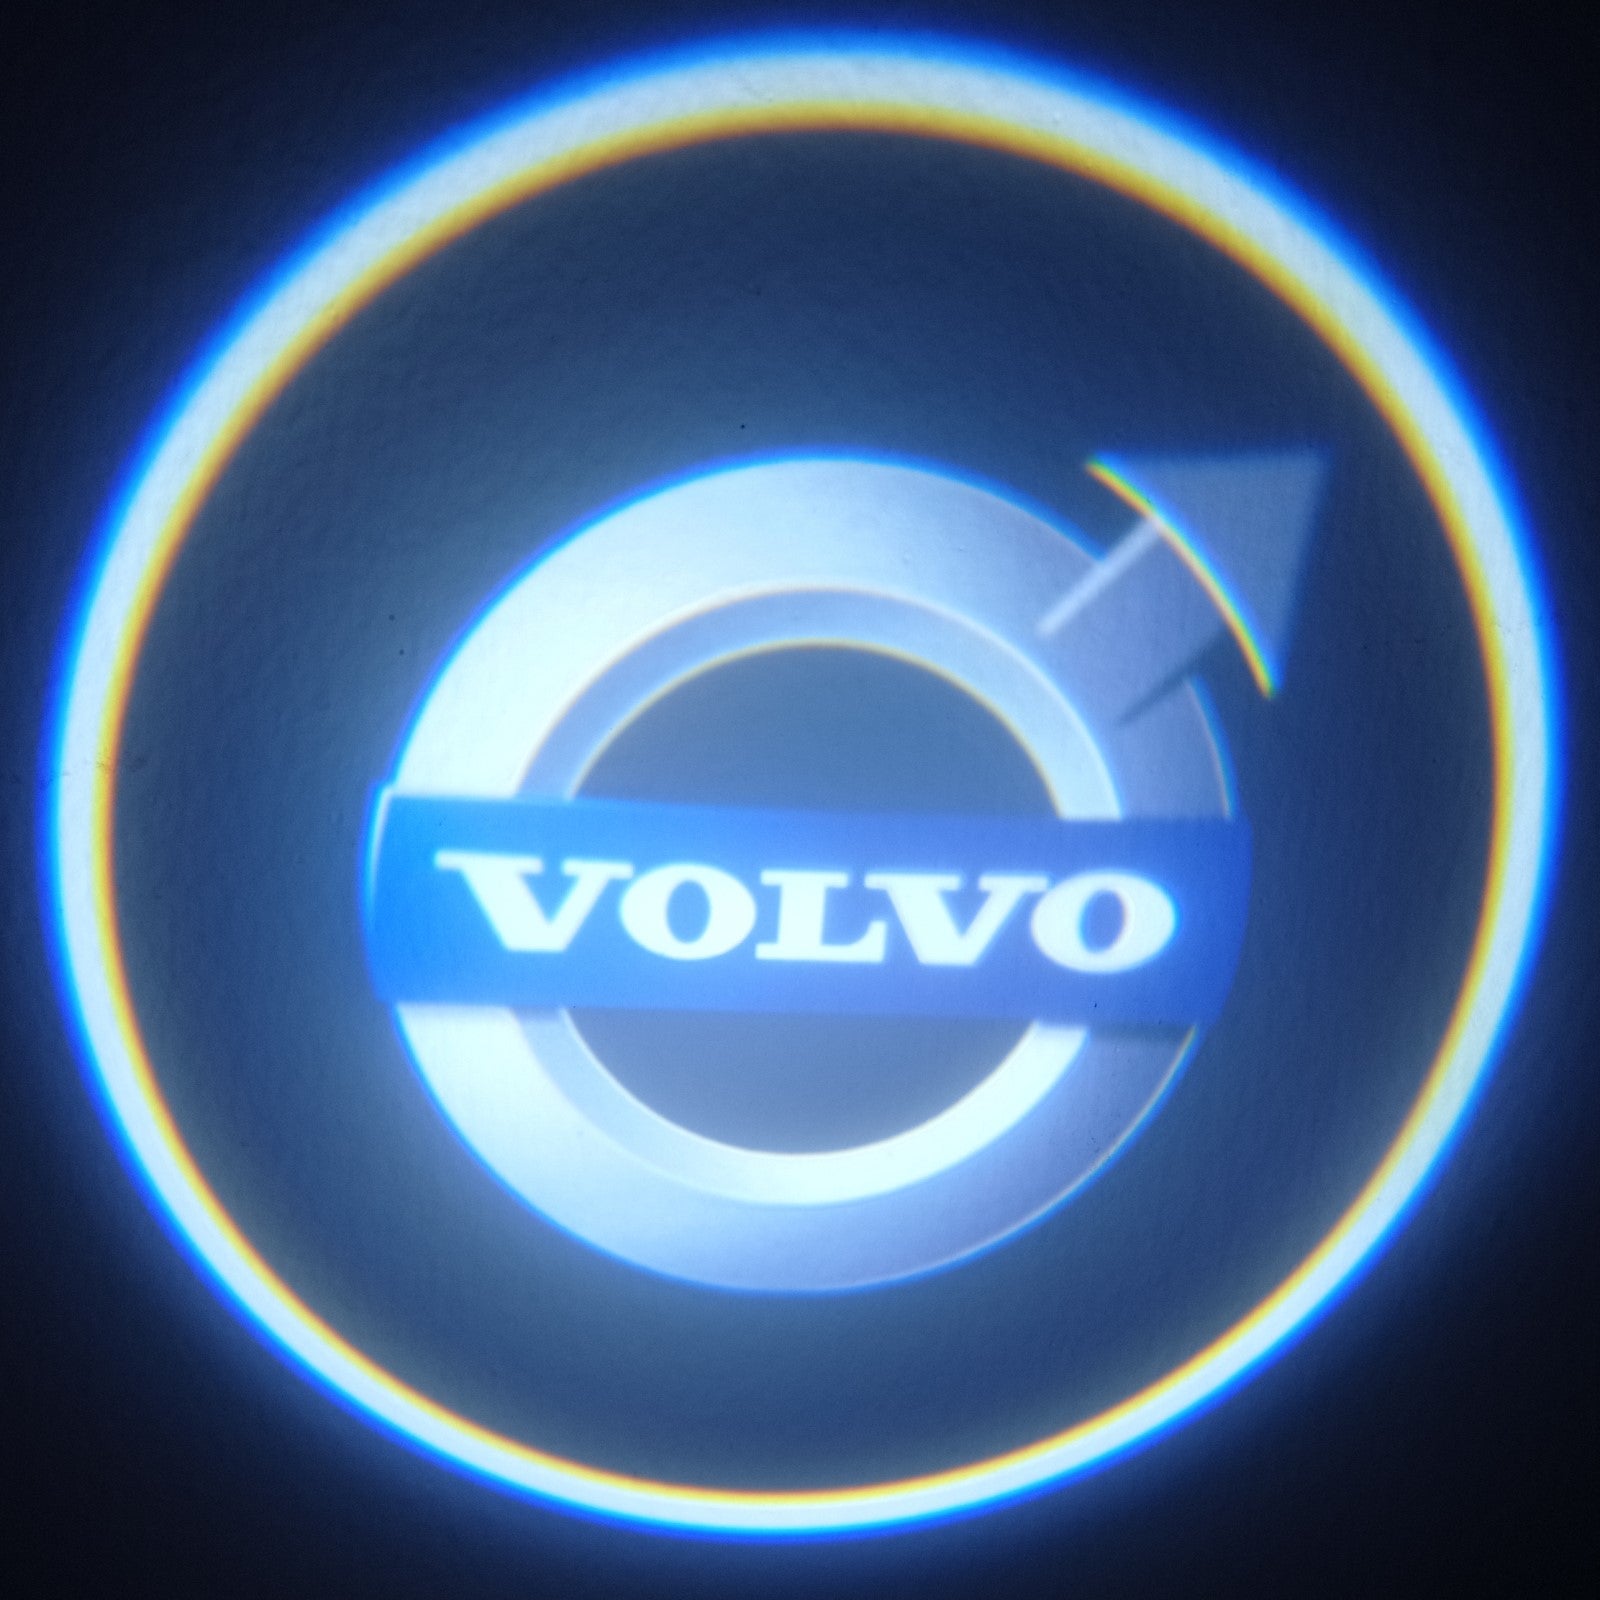 Luzes Cortesia com Logotipo marca Volvo